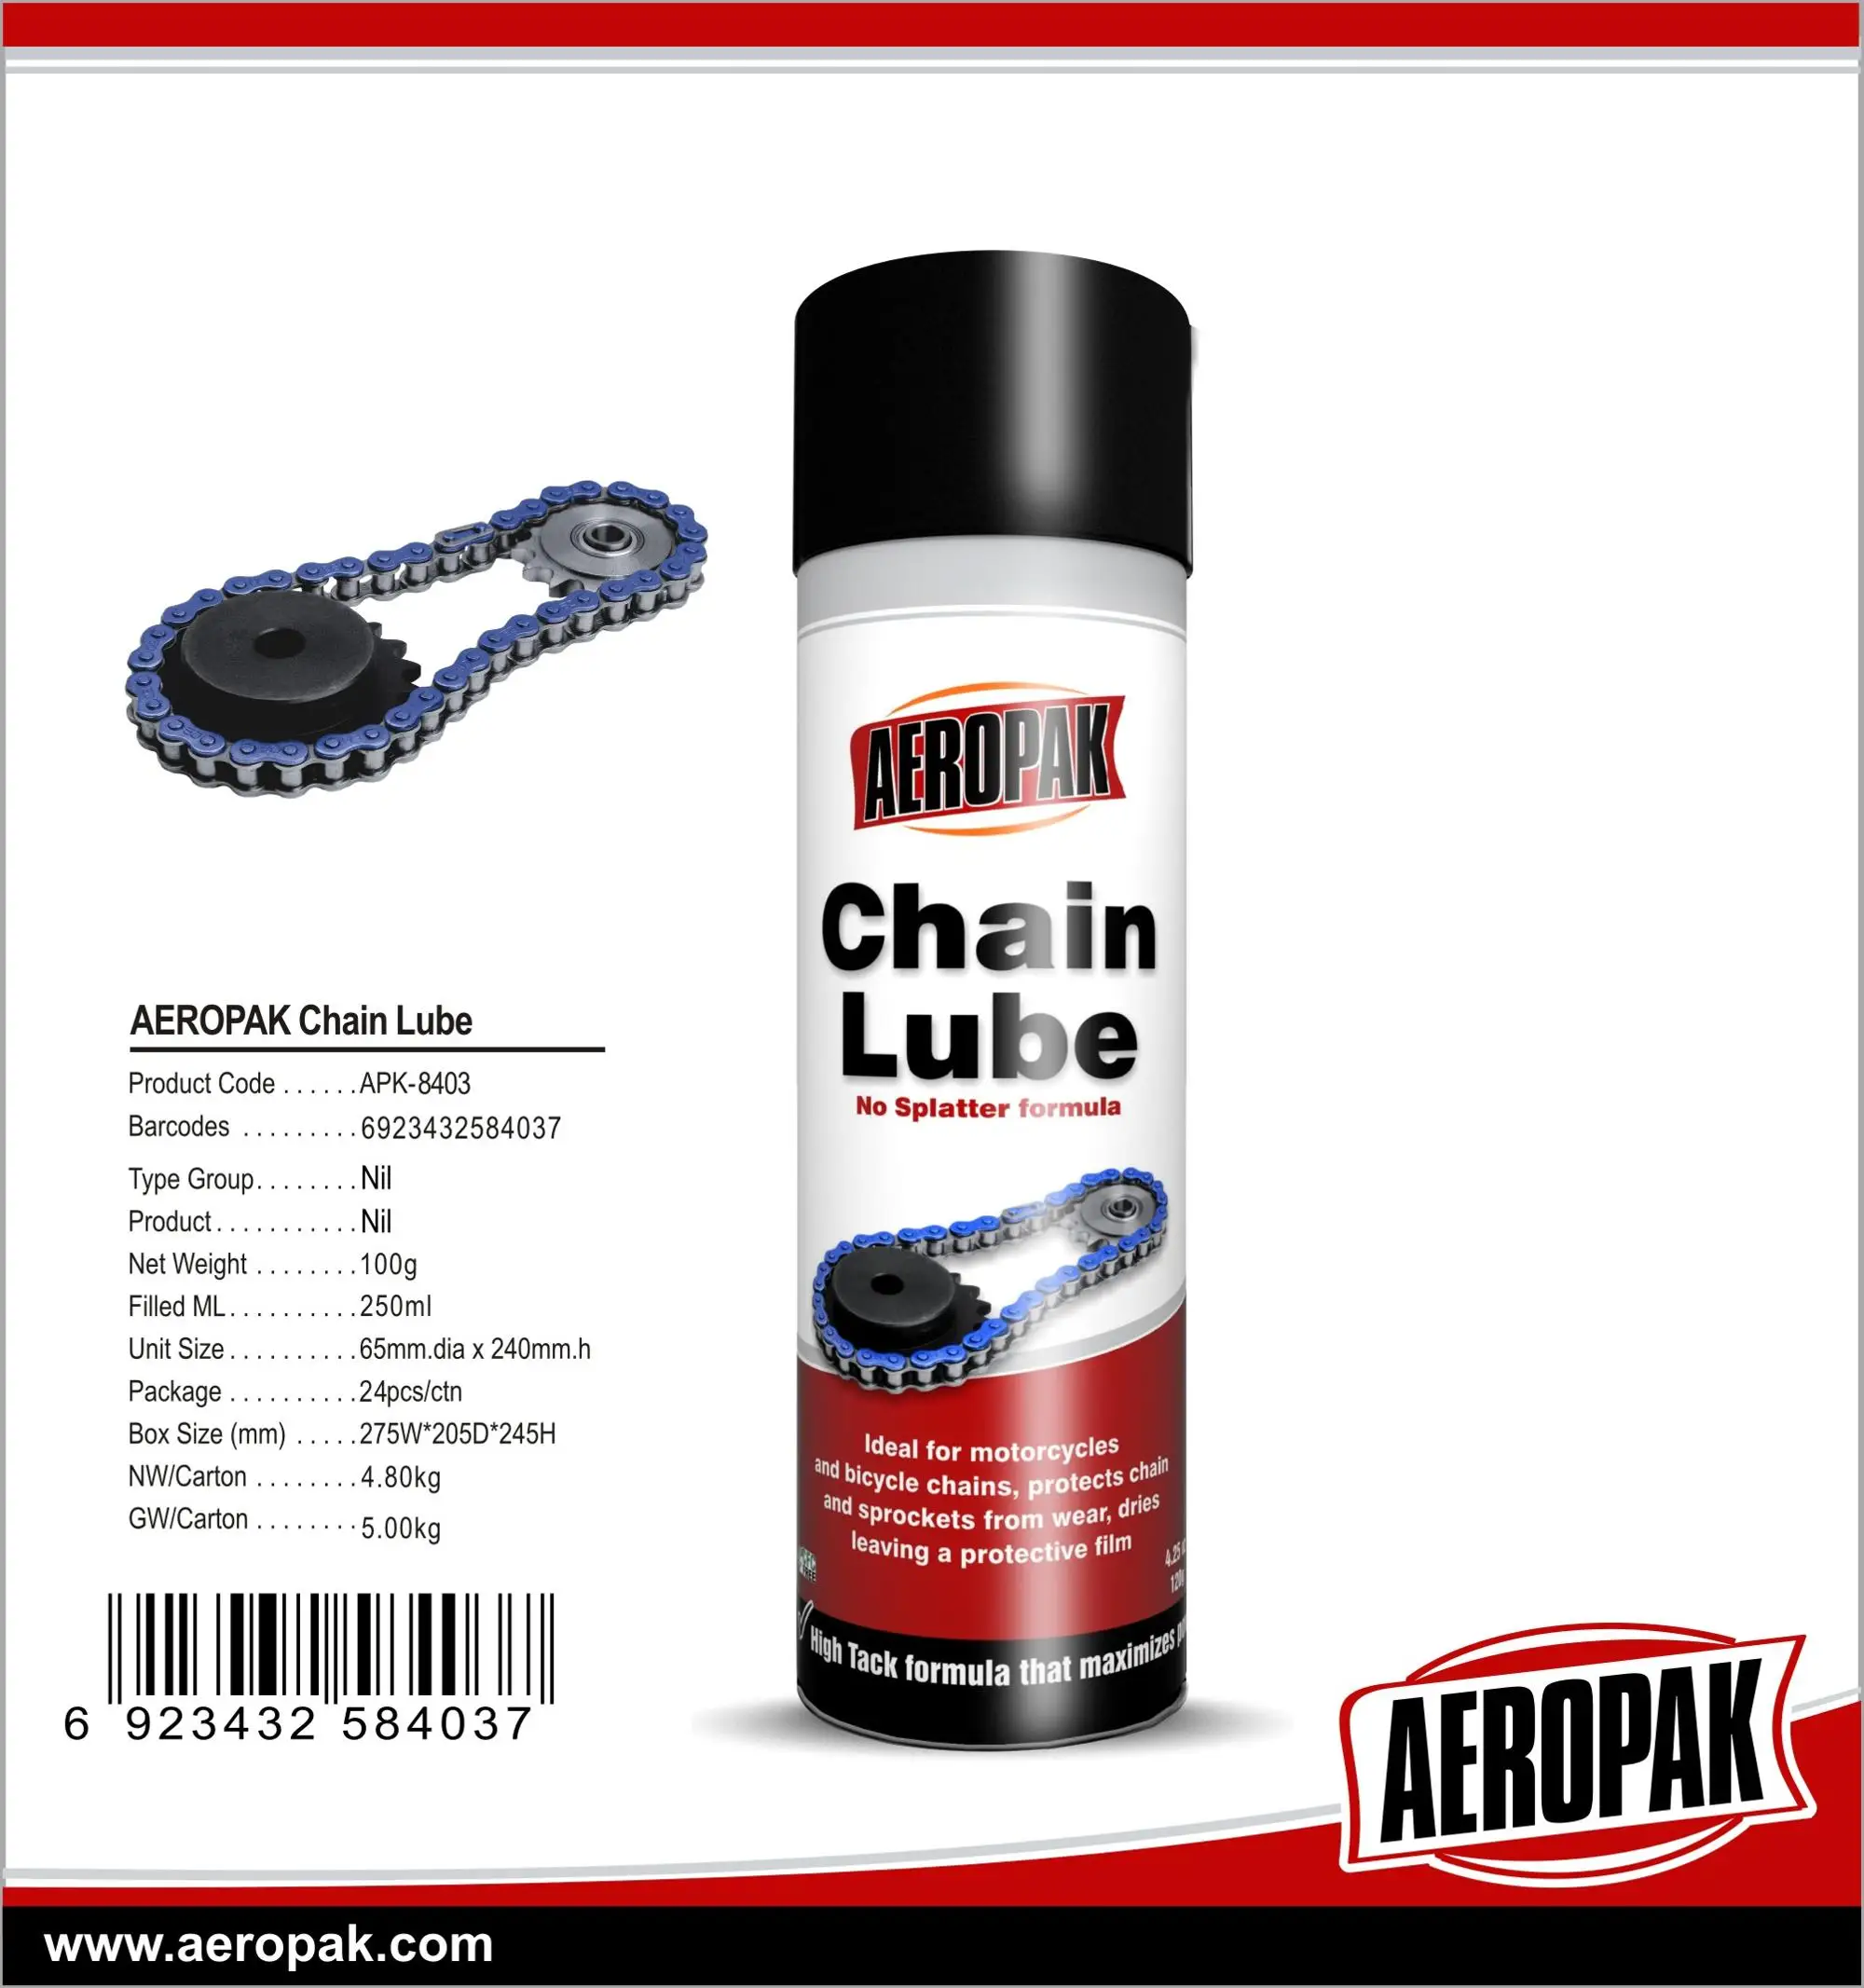 Aeropak Bike Chain Lube Oil Motorcycle Chain Lube Spray